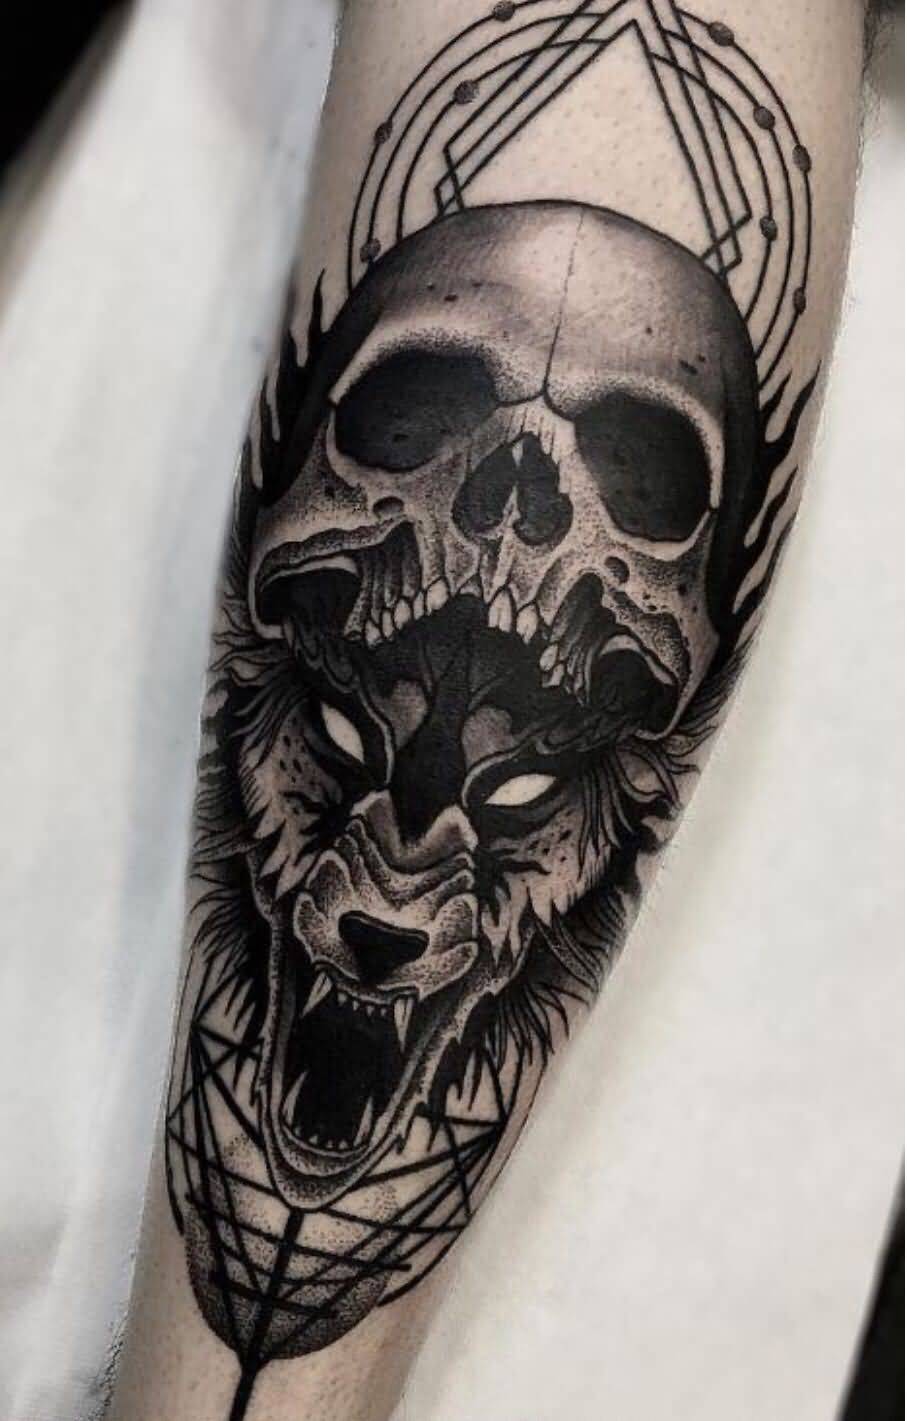 Wolf-and-Skull-Tattoo-On-Forearm.jpg